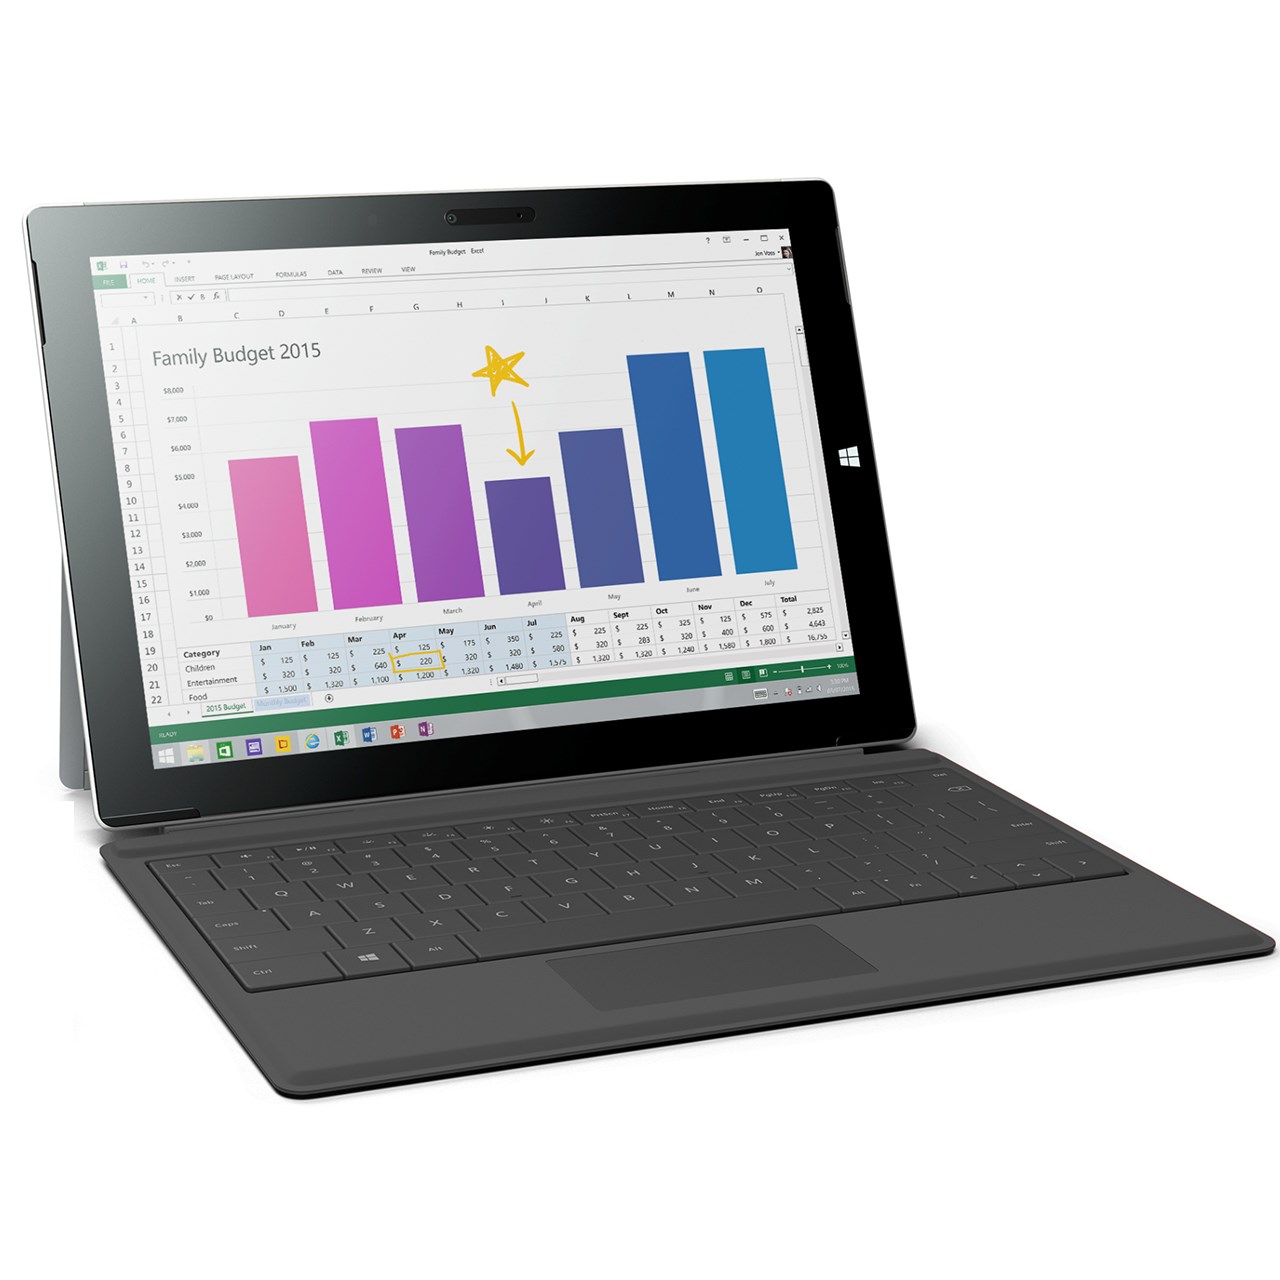 تبلت مایکروسافت مدل Surface 3 4G - C به همراه کیبورد ظرفیت 128 گیگابایت